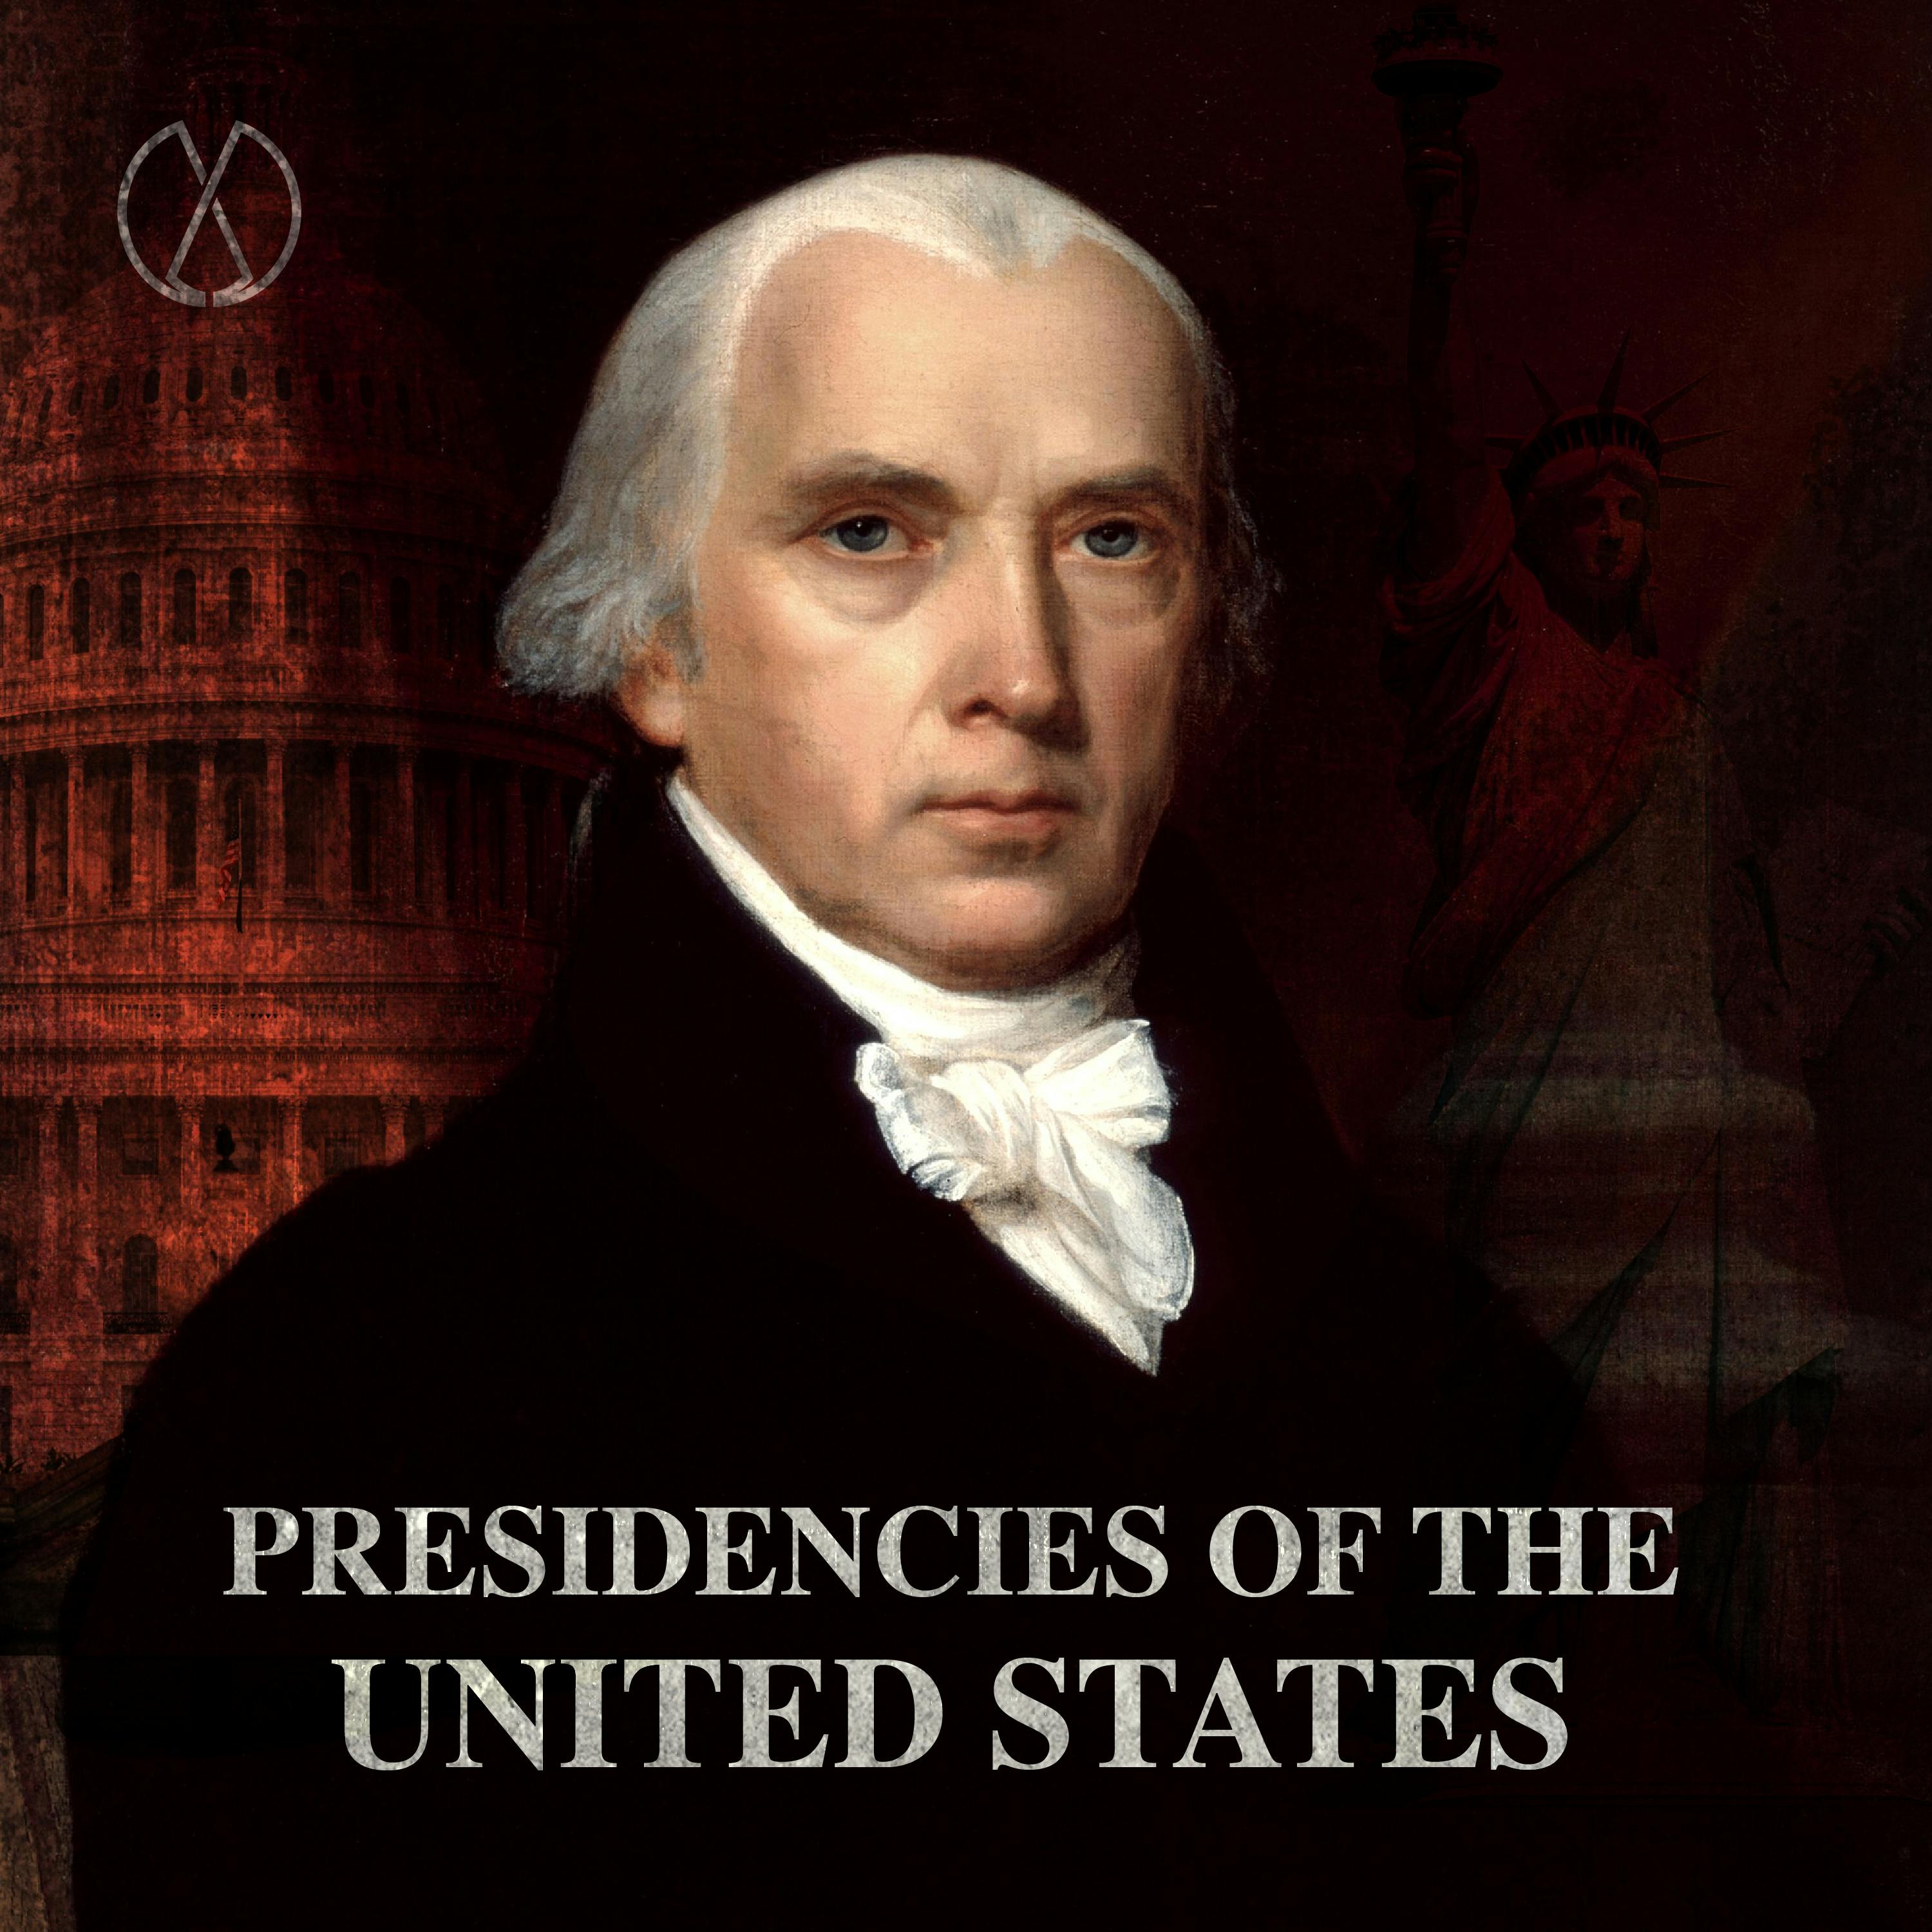 presidencies-of-the-united-states-history-podblast